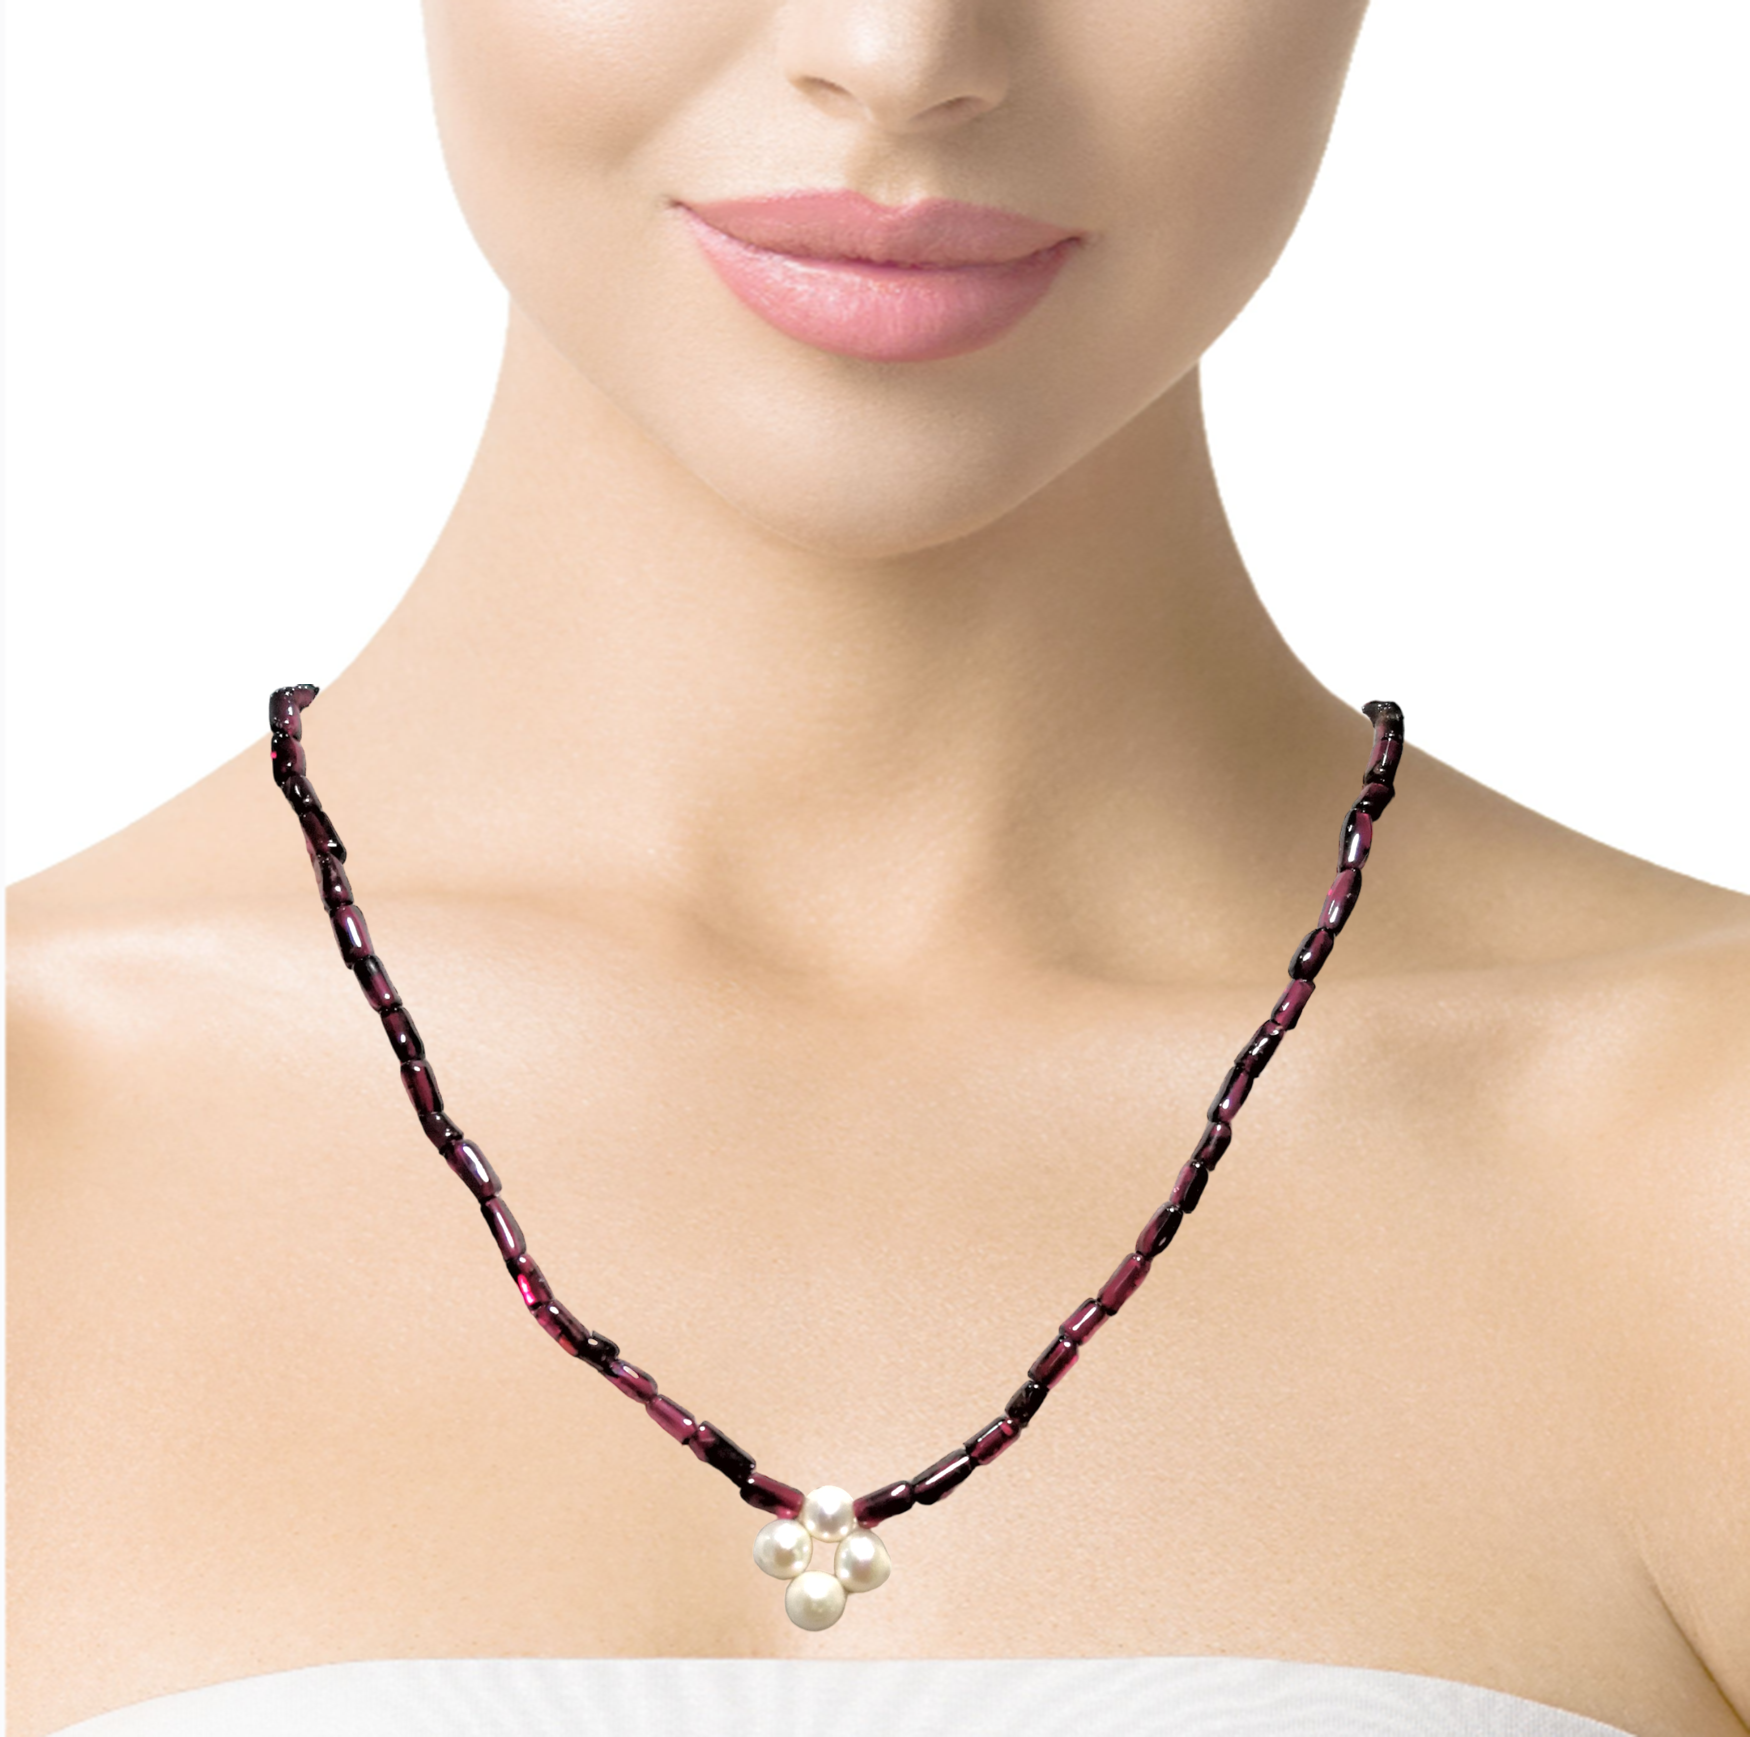 Natural Handmade Necklace 16"-18" Garnet Freshwater Pearls Gemstone Beads Jewellery